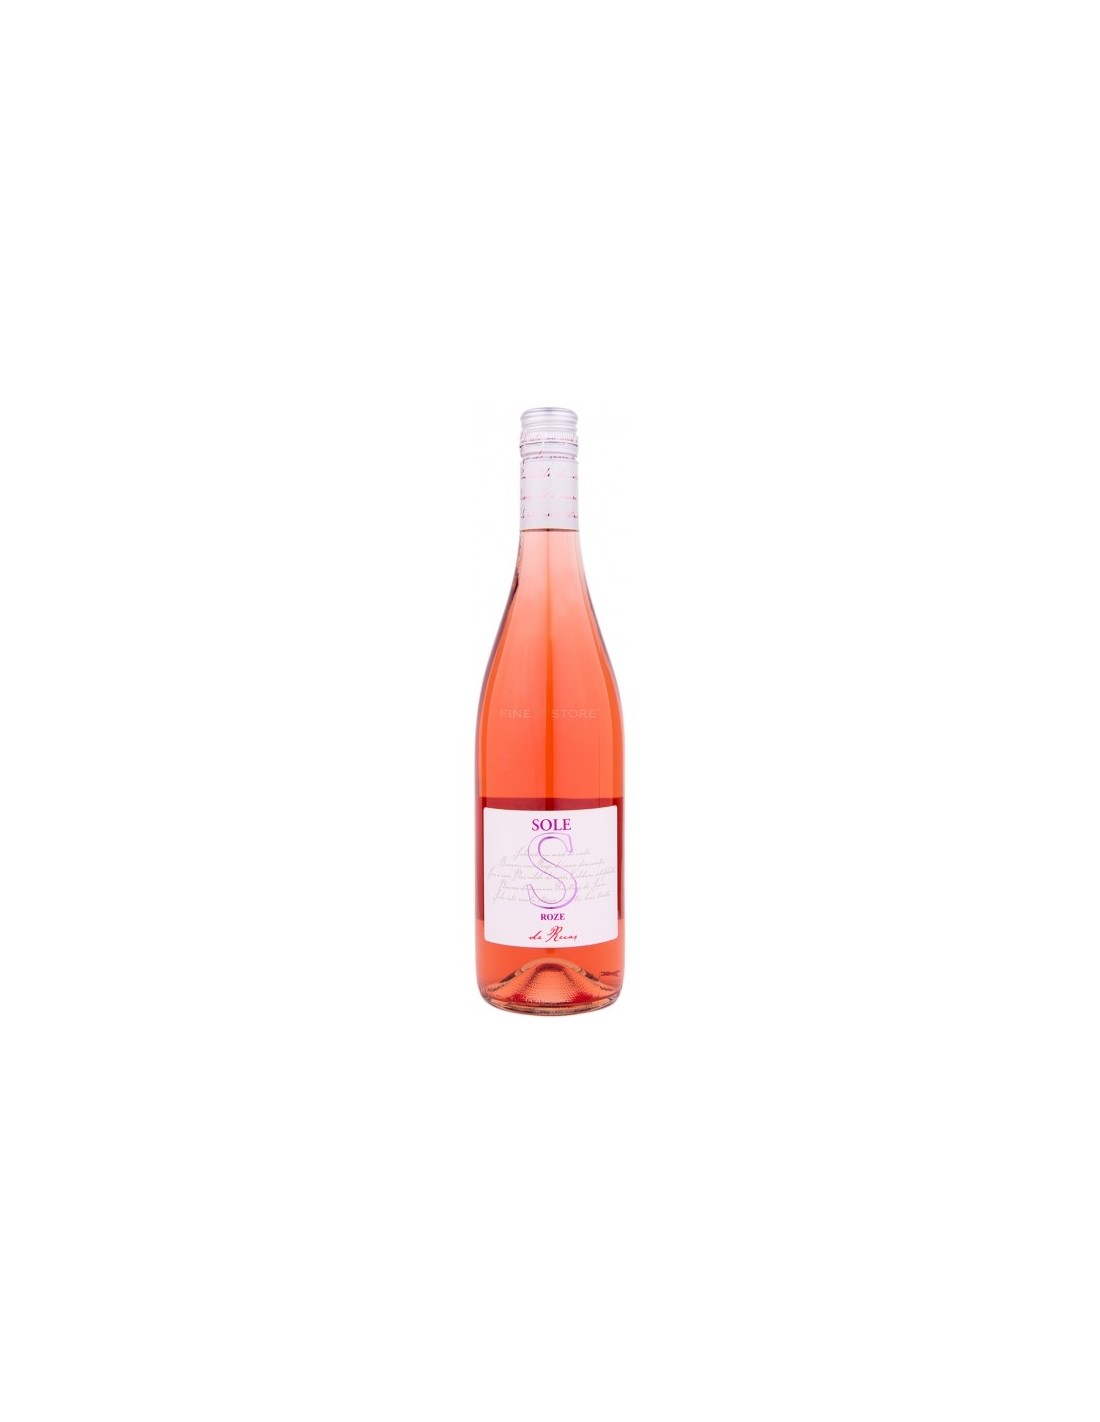 Vin roze sec Sole Recas, 0.75L, 13.5% alc., Romania alcooldiscount.ro